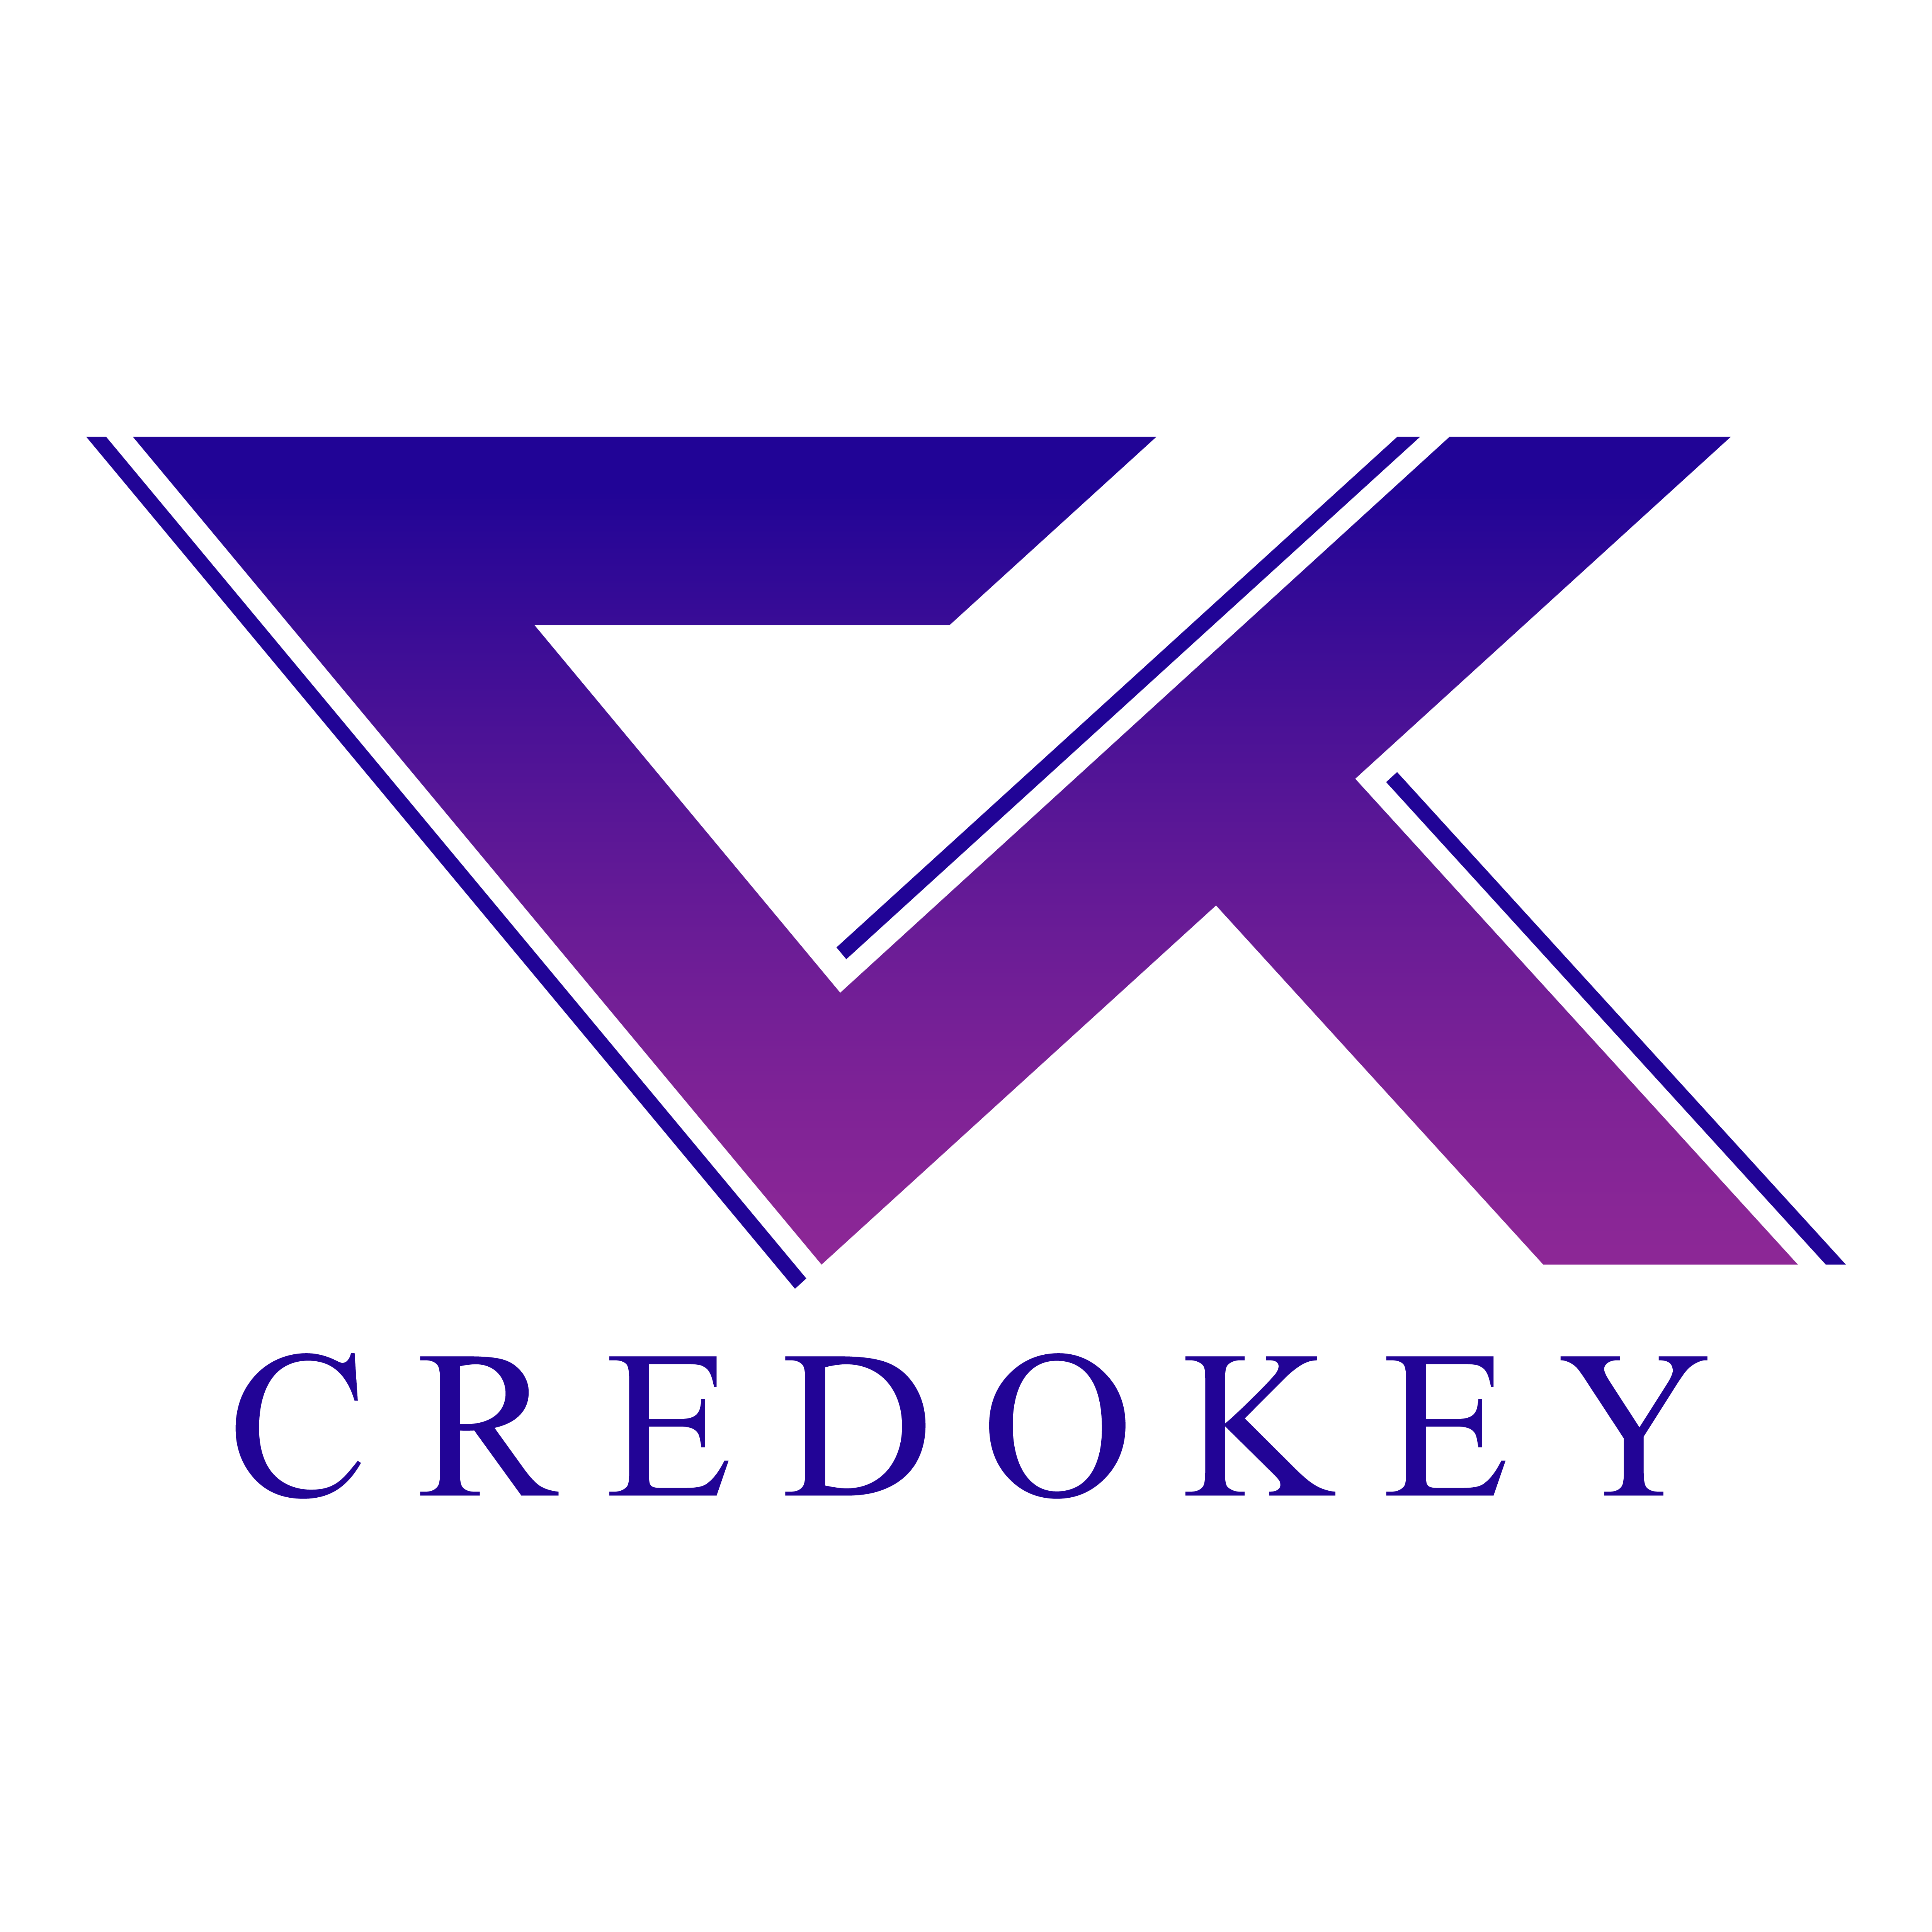 CredoKey Logo